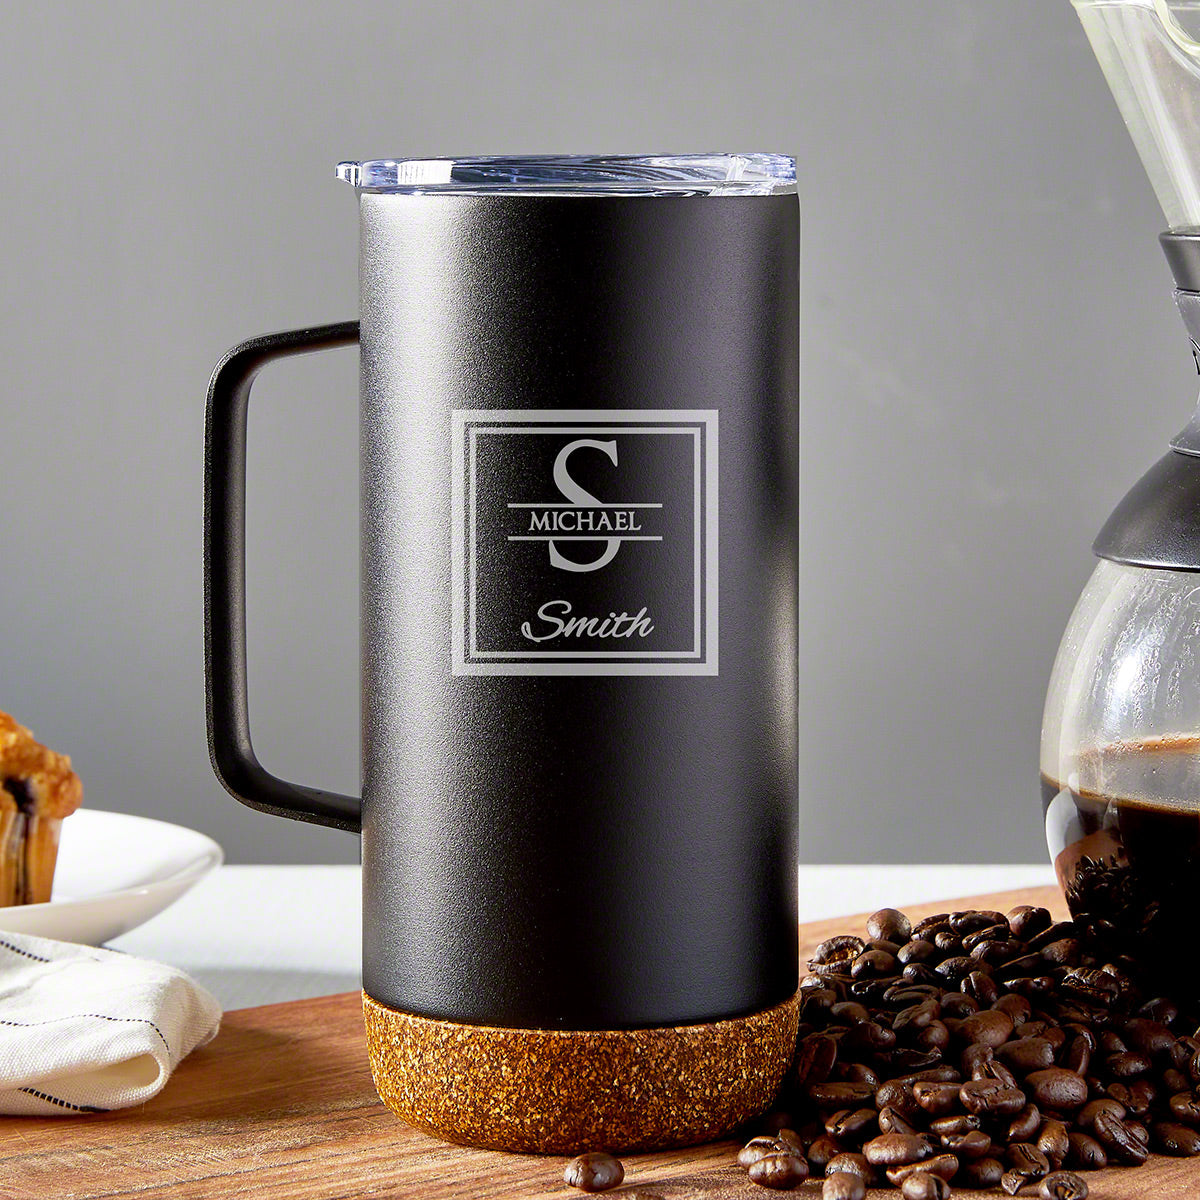 10hr Copper Insulated Custom Coffee Travel Mug with Handle and Cork Bottom